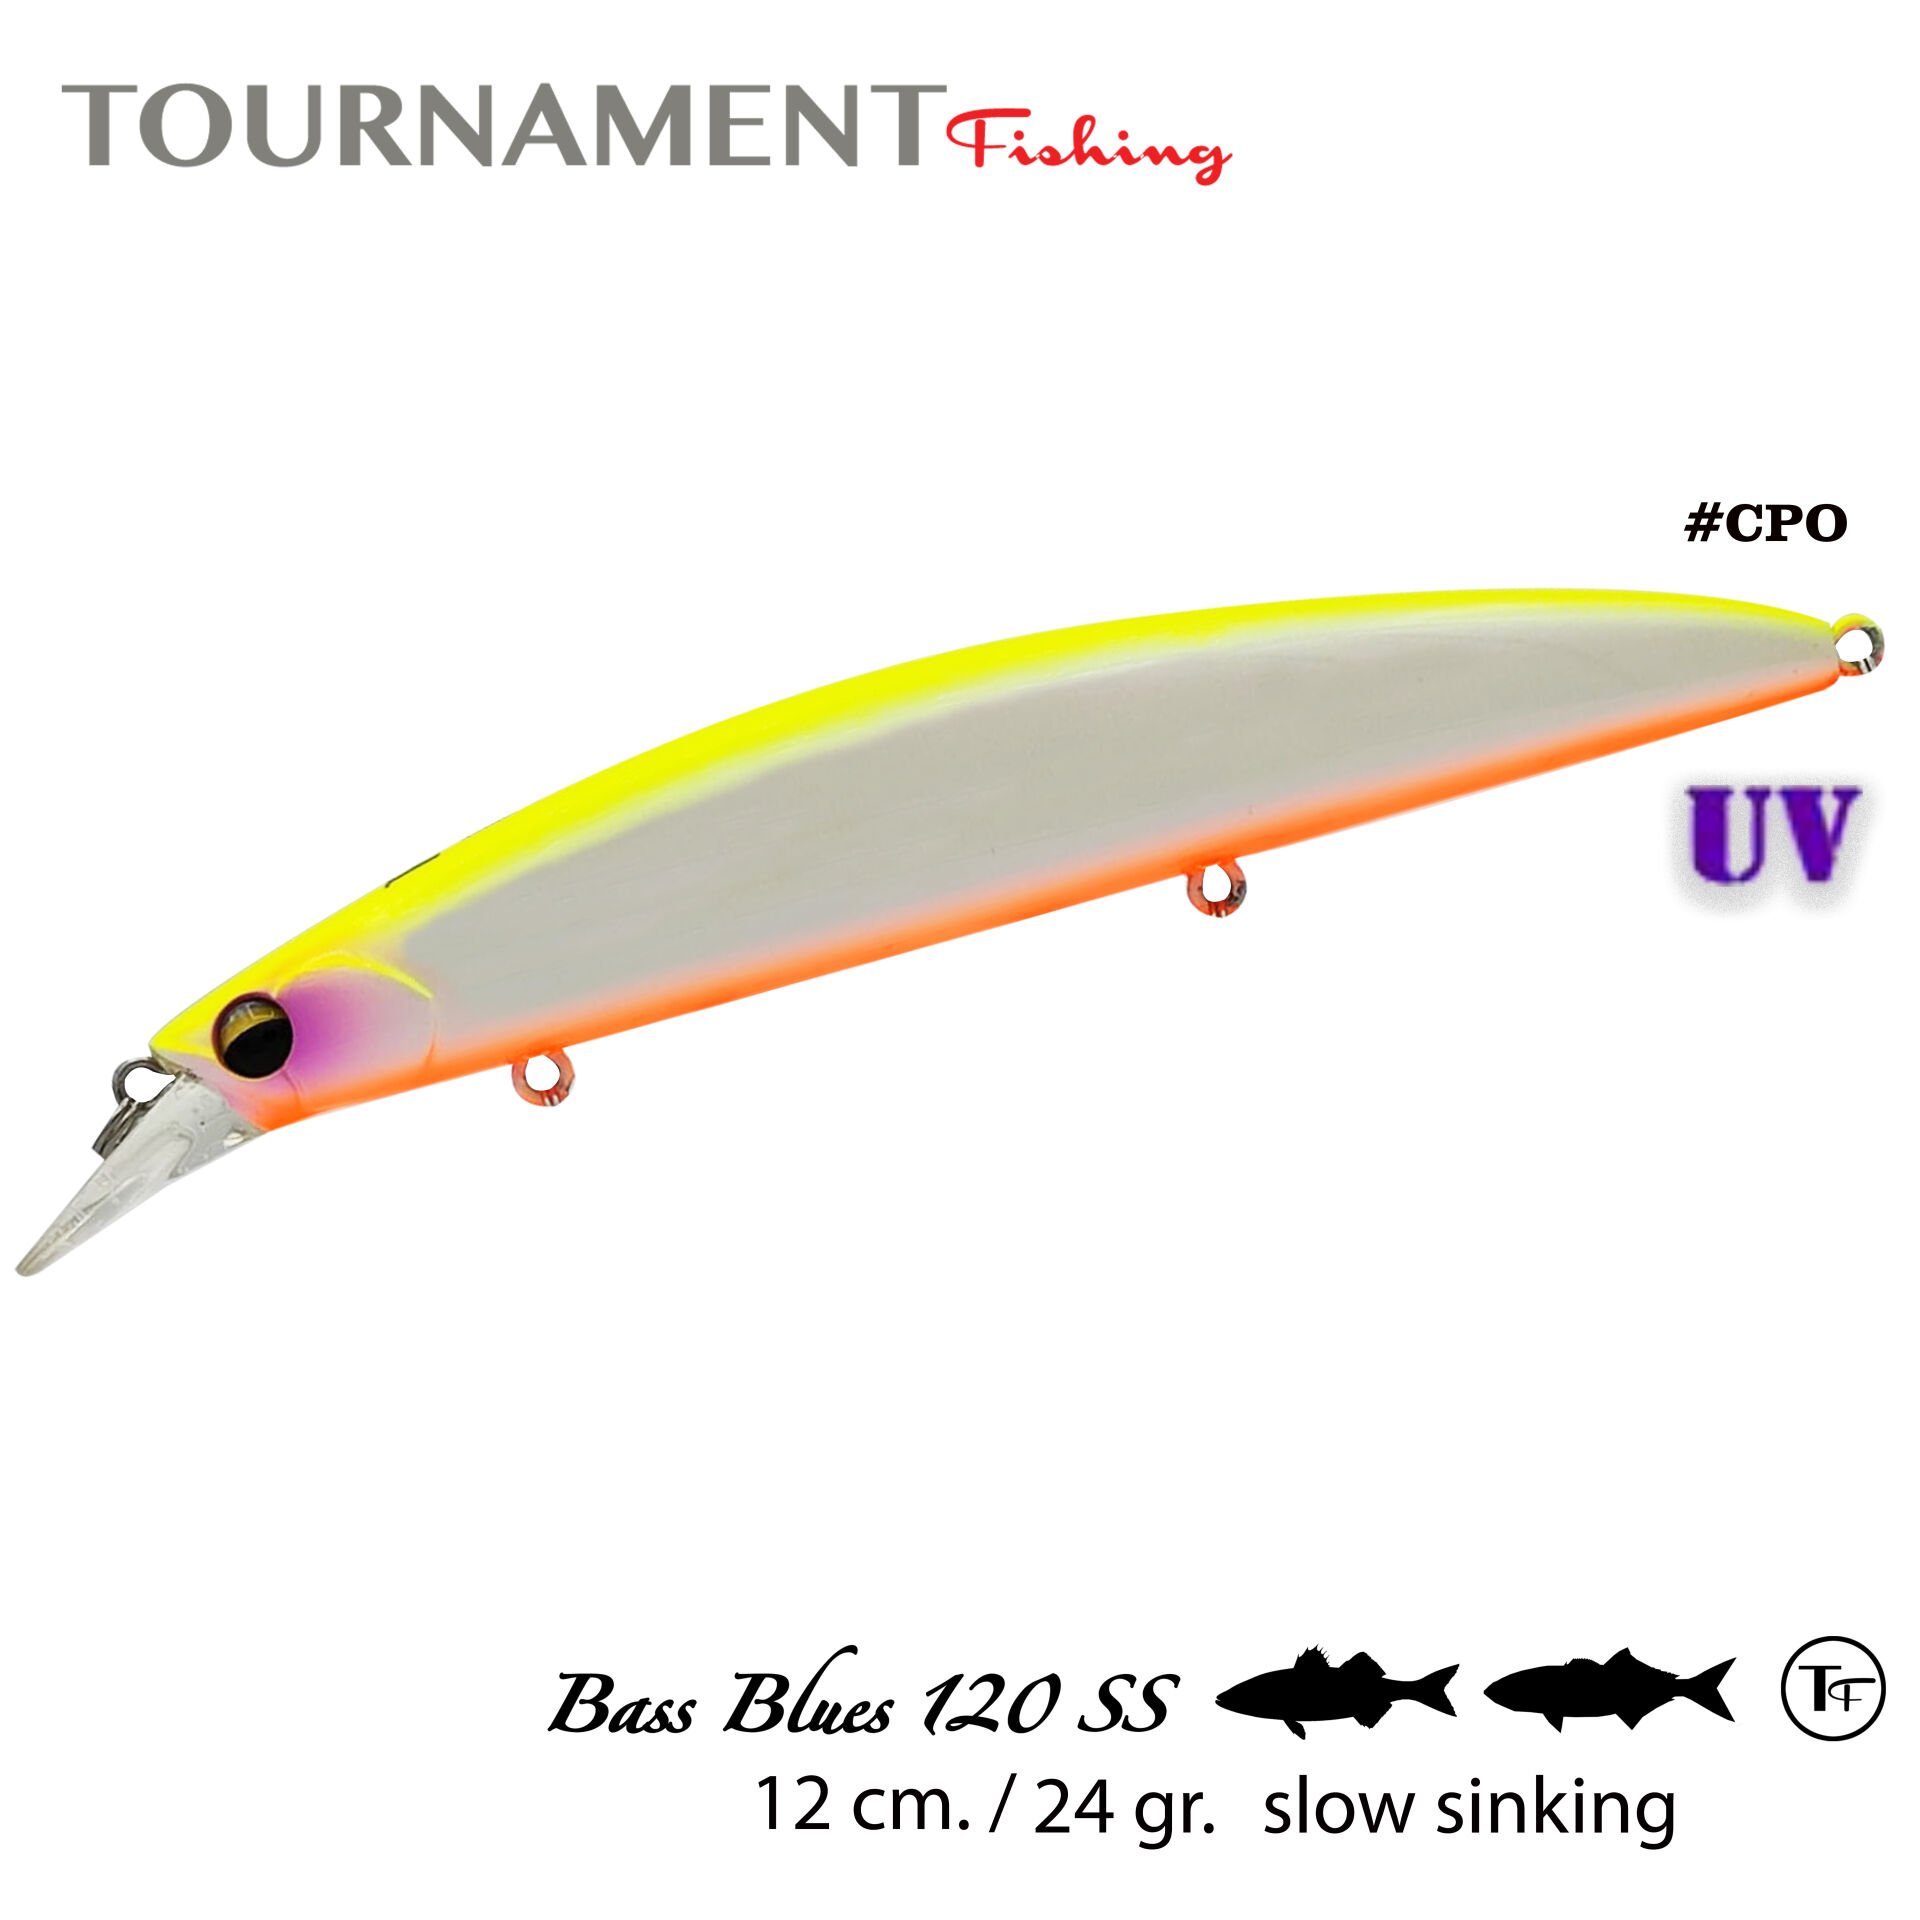 Tournament fishing Bassblues 120 SS 120 mm 24 gr #CPO